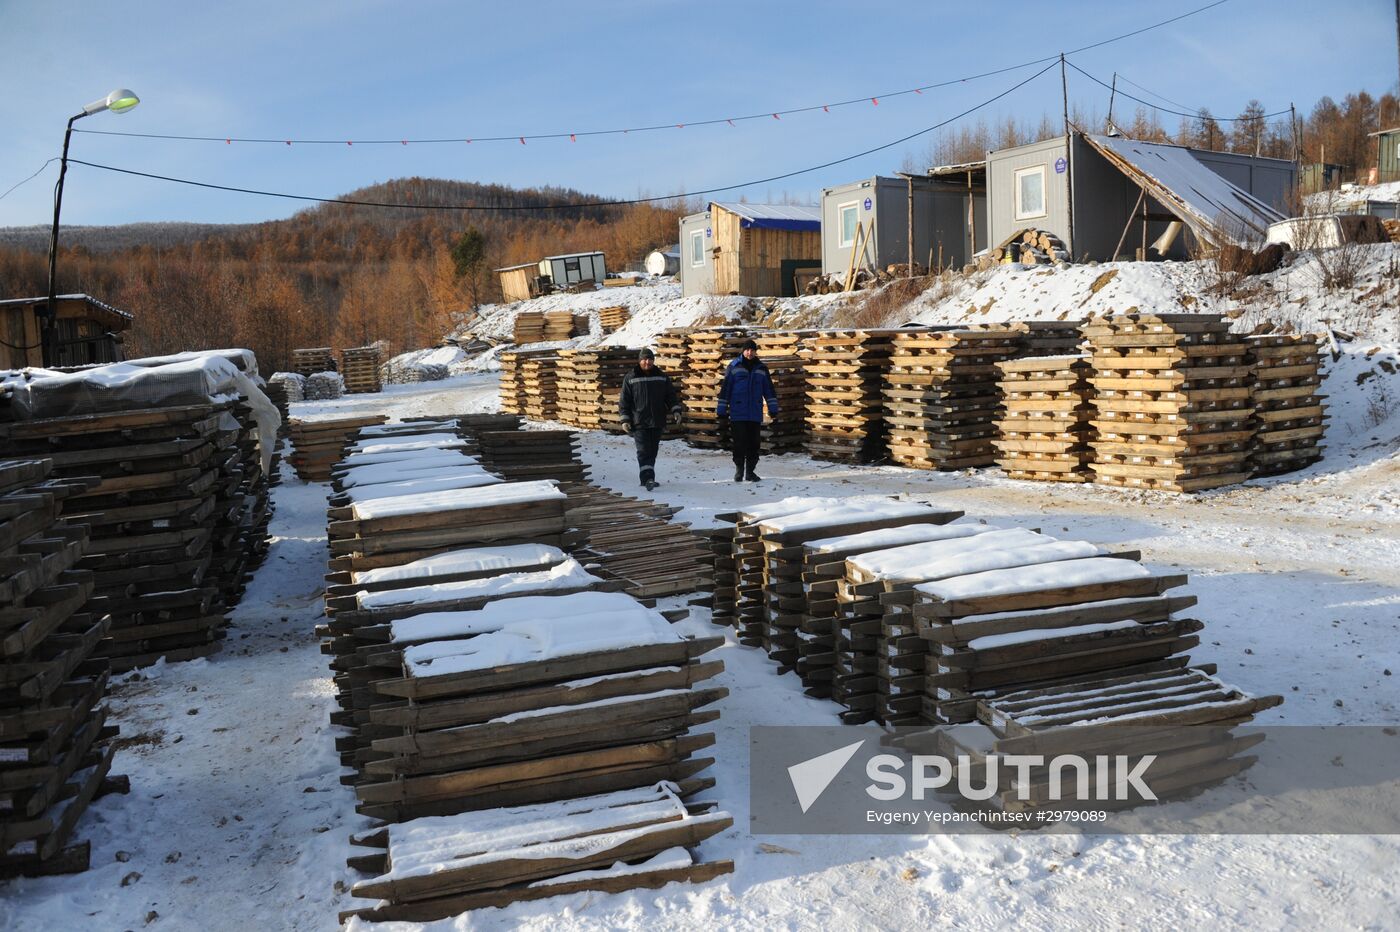 Gold mines in Trans-Baikal Krai